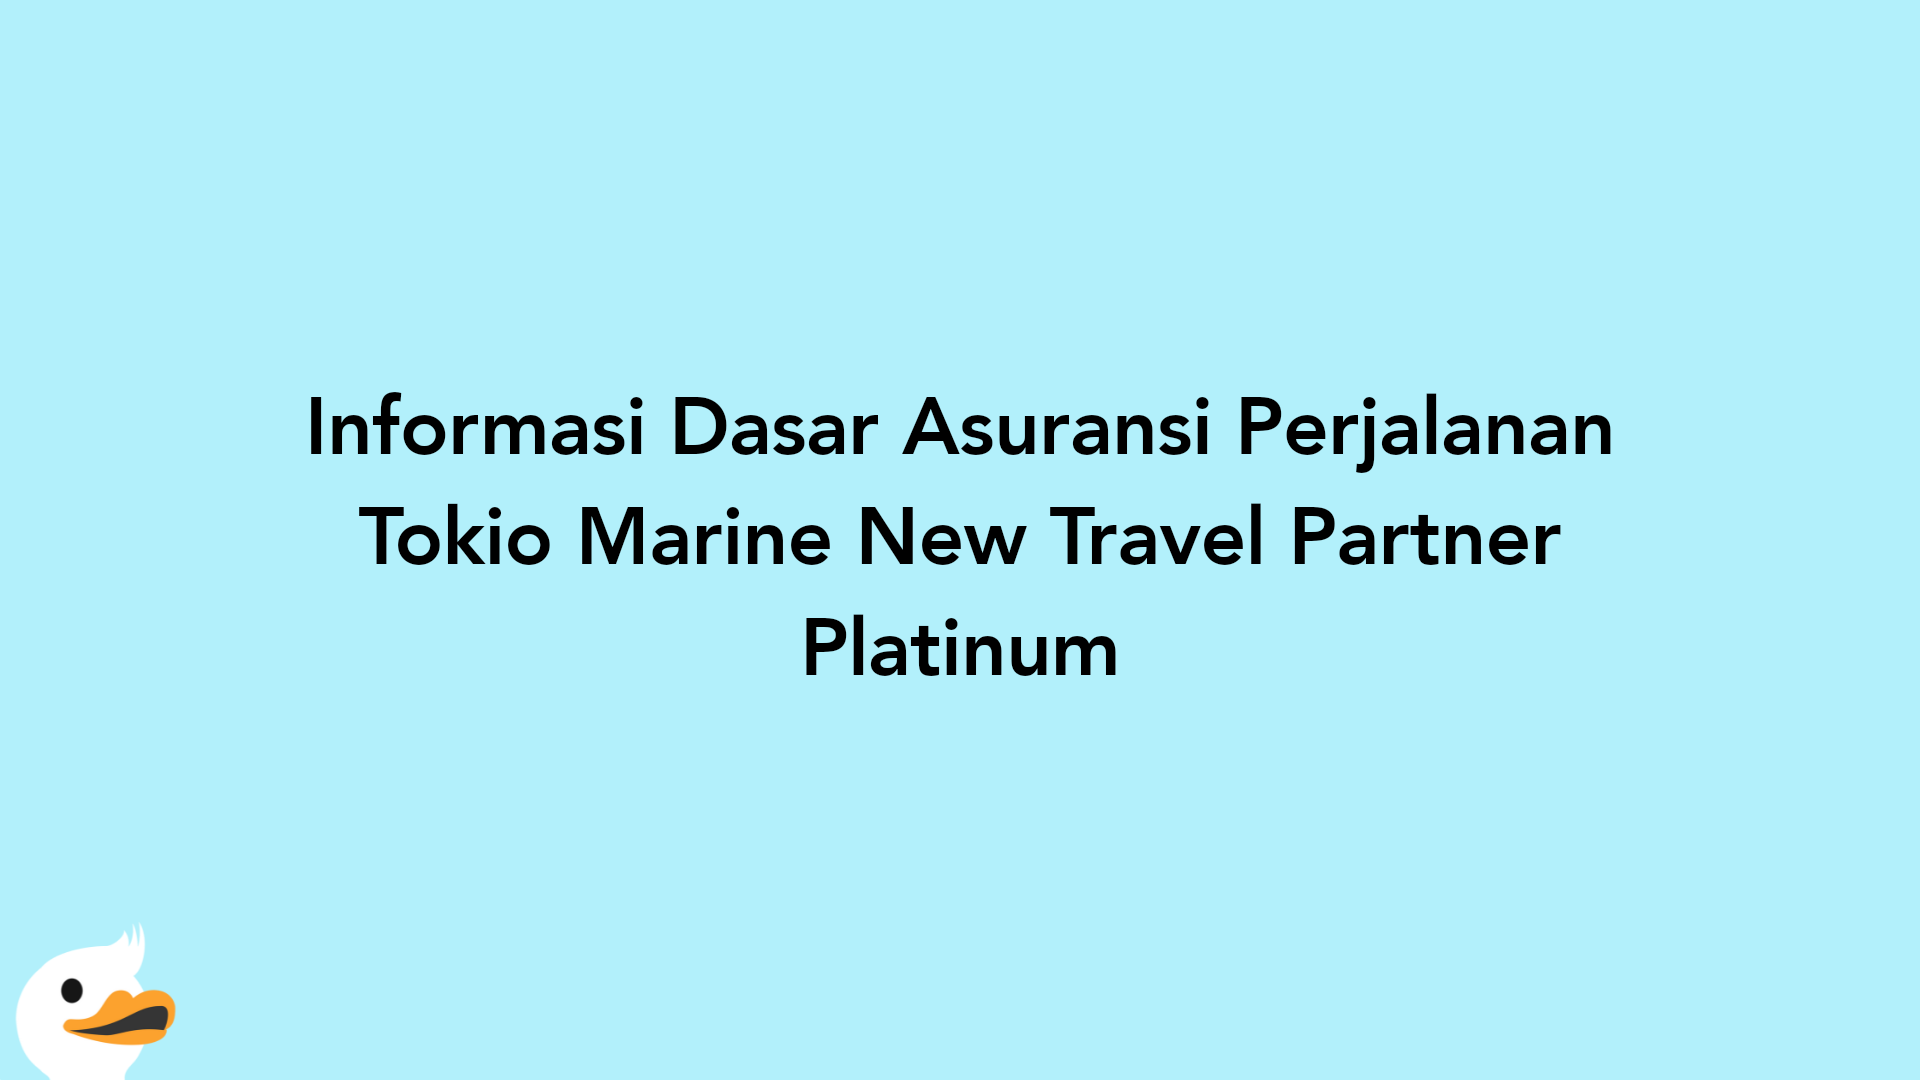 Informasi Dasar Asuransi Perjalanan Tokio Marine New Travel Partner Platinum